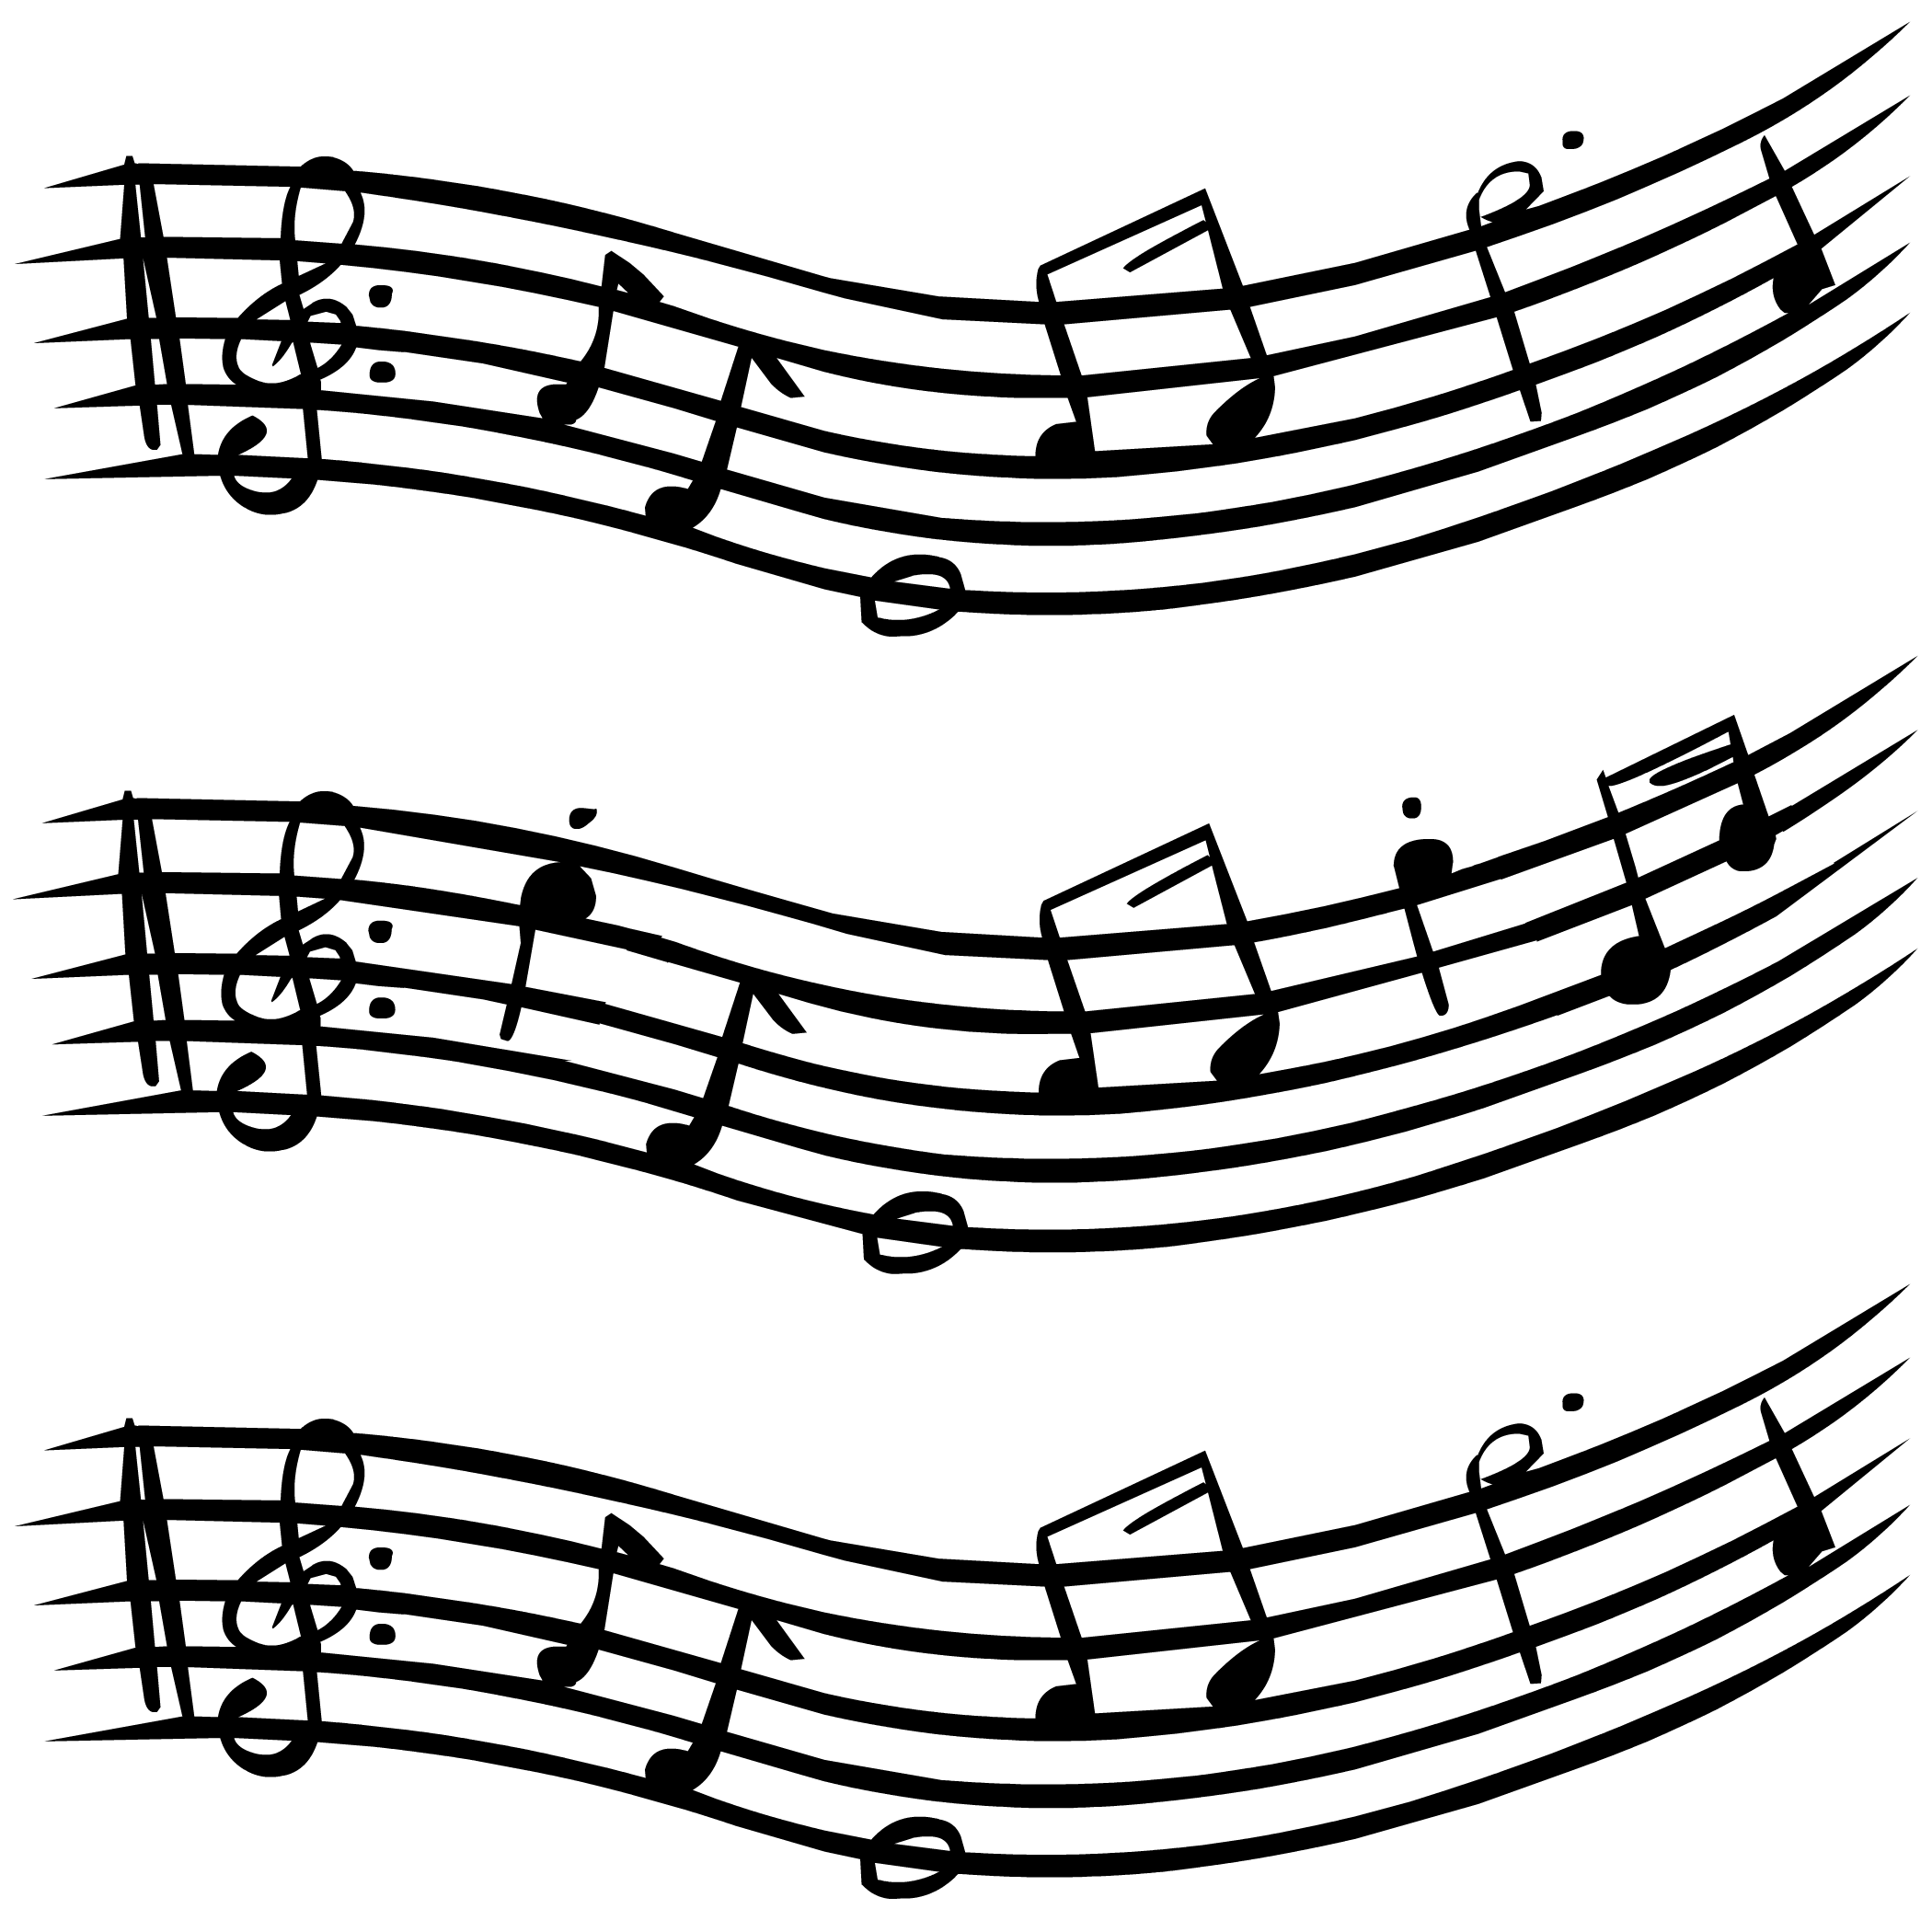 Music Score Background | Club Penguin Rewritten Wiki | Fandom